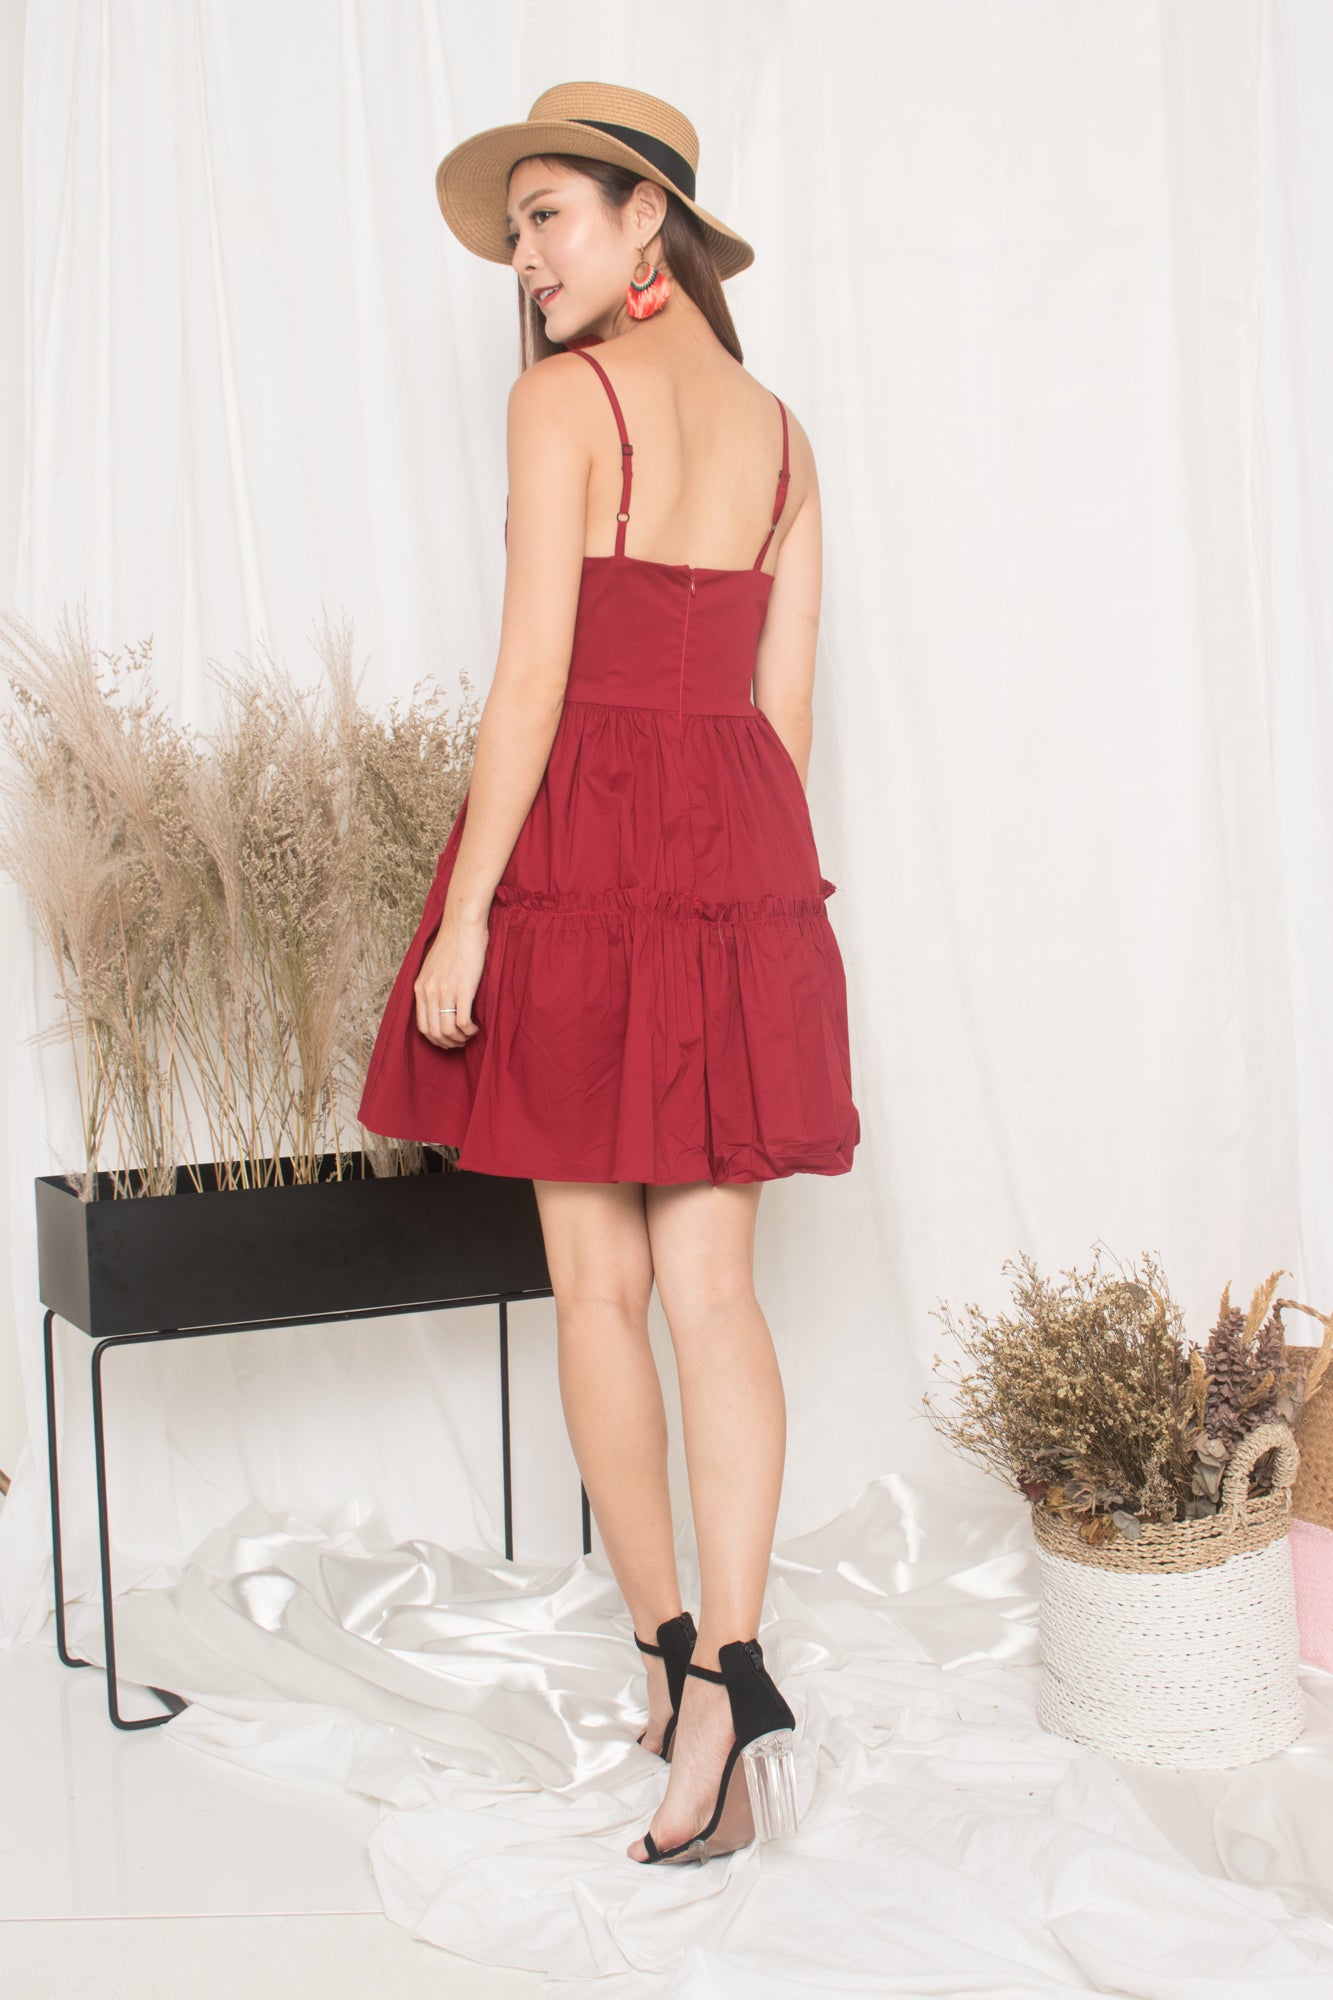 Oksar Layer Dress in Burgundy Red